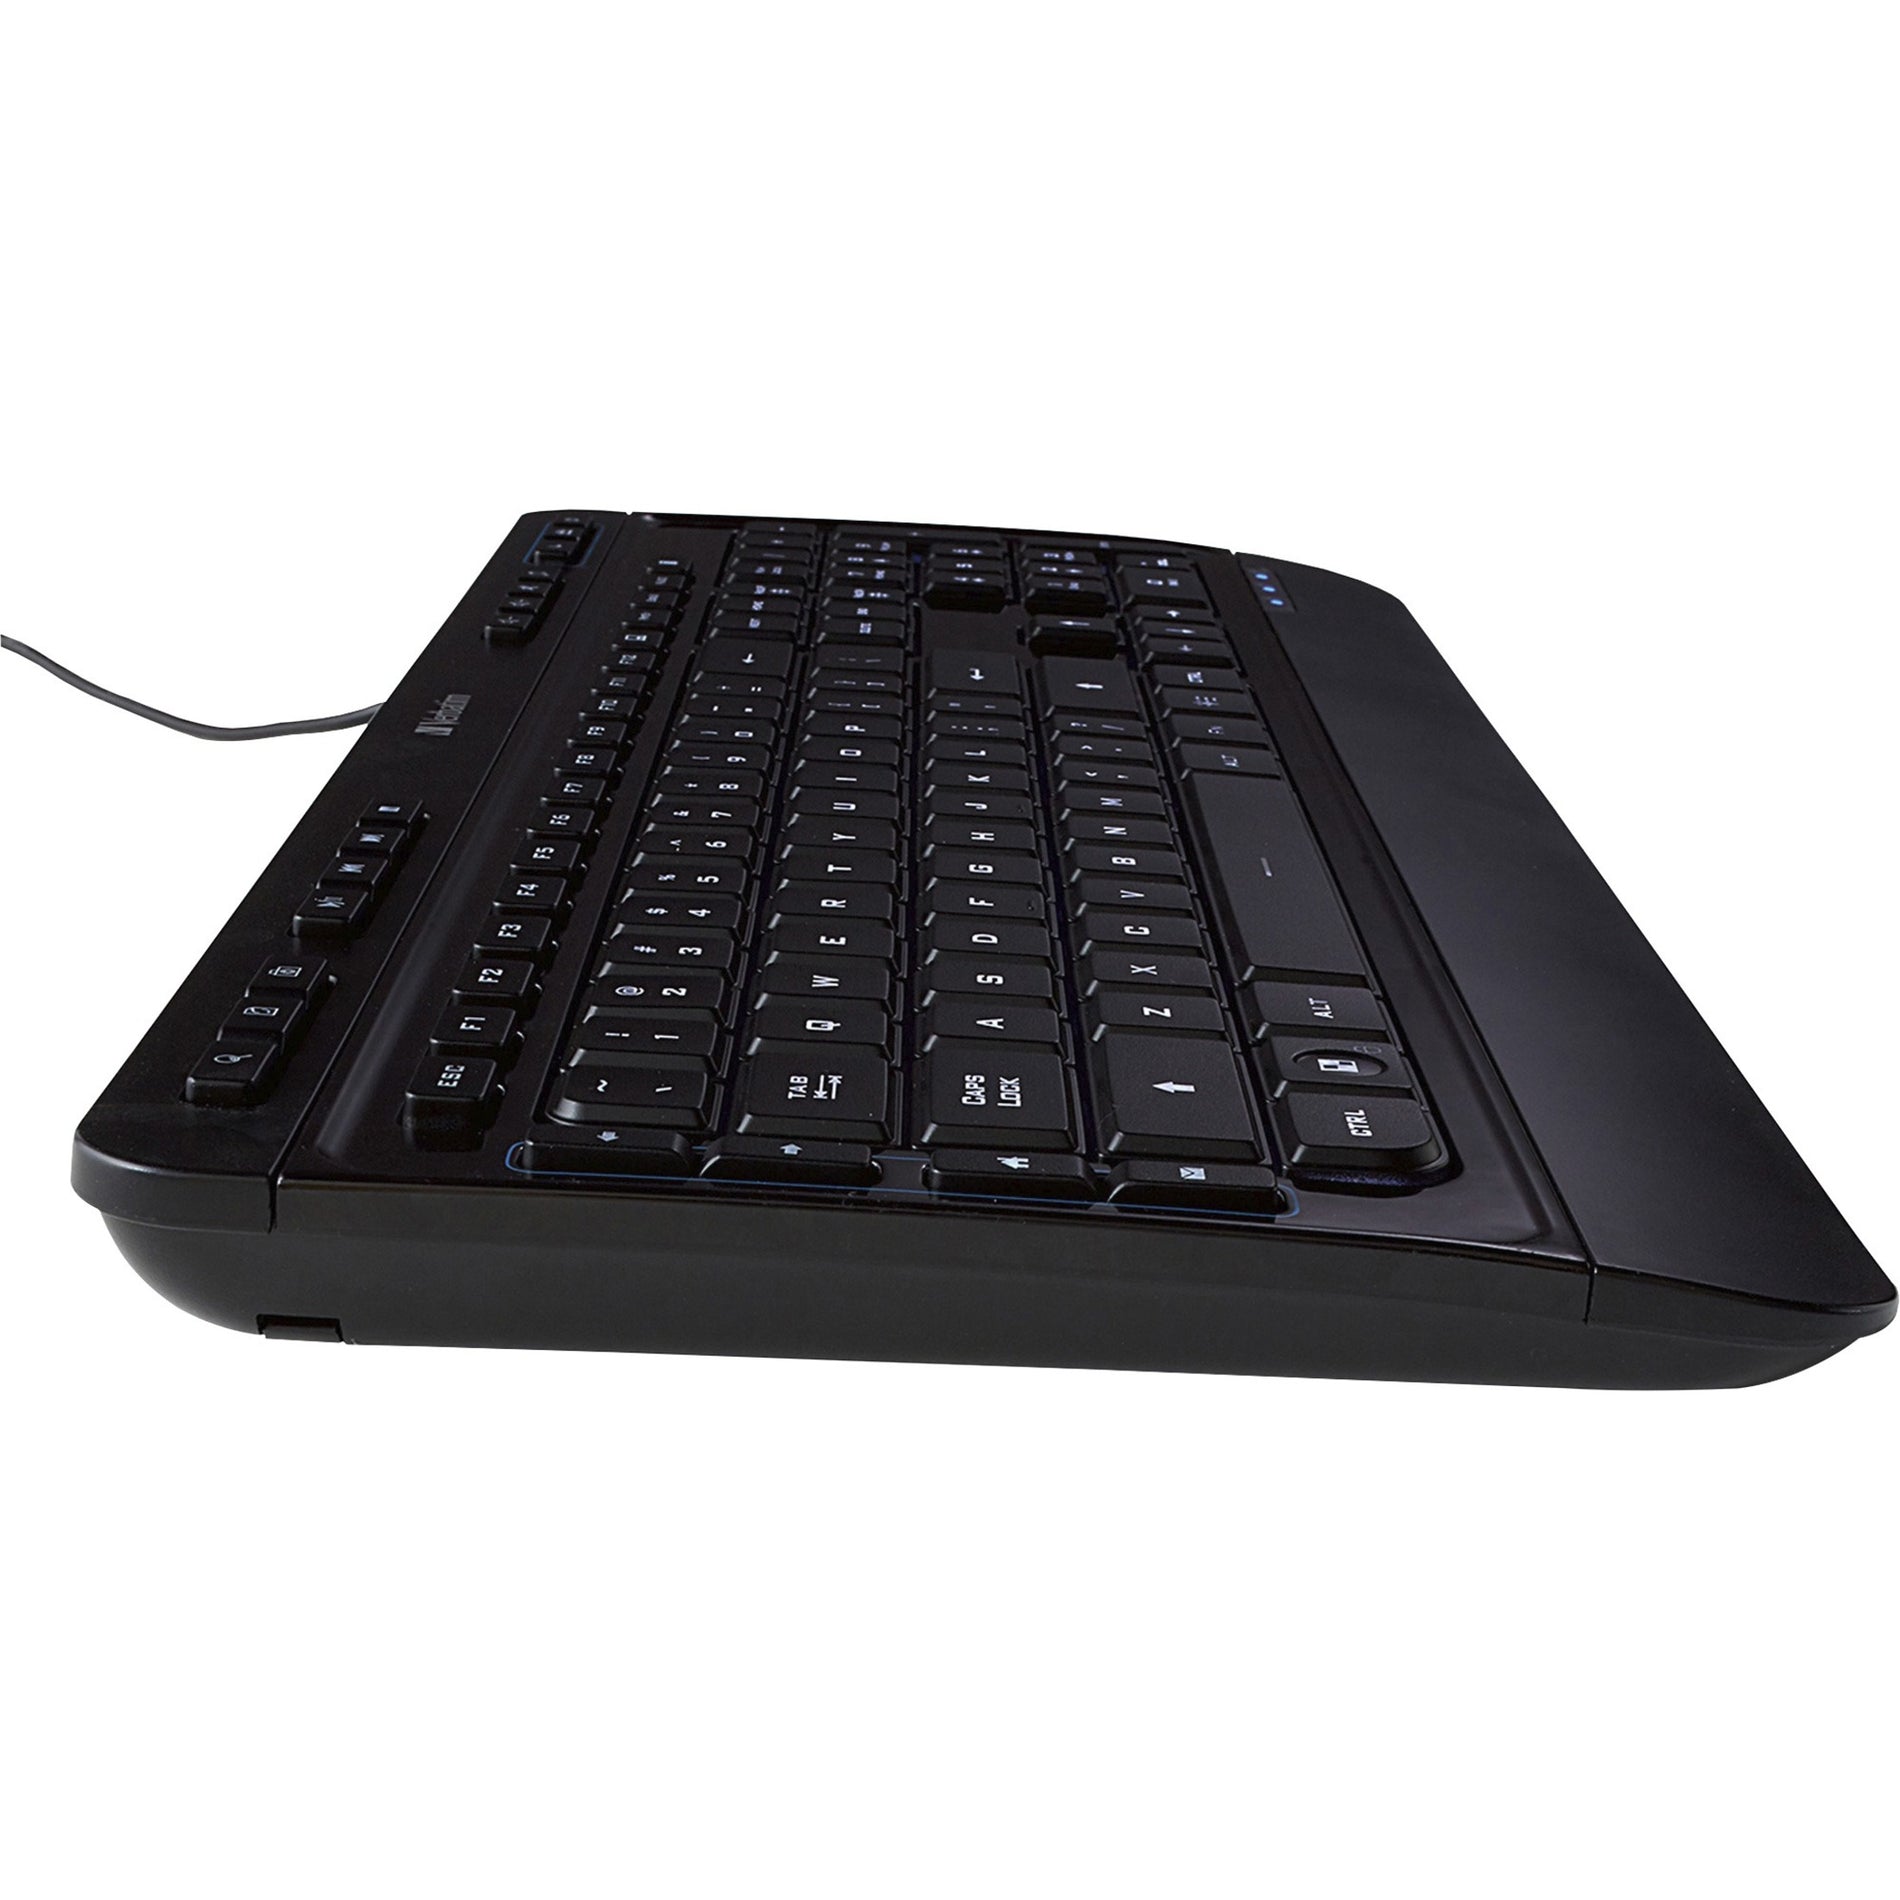 Verbatim 99789 Illuminated Wired Keyboard, USB Type A, Media Player Hot Keys, Black